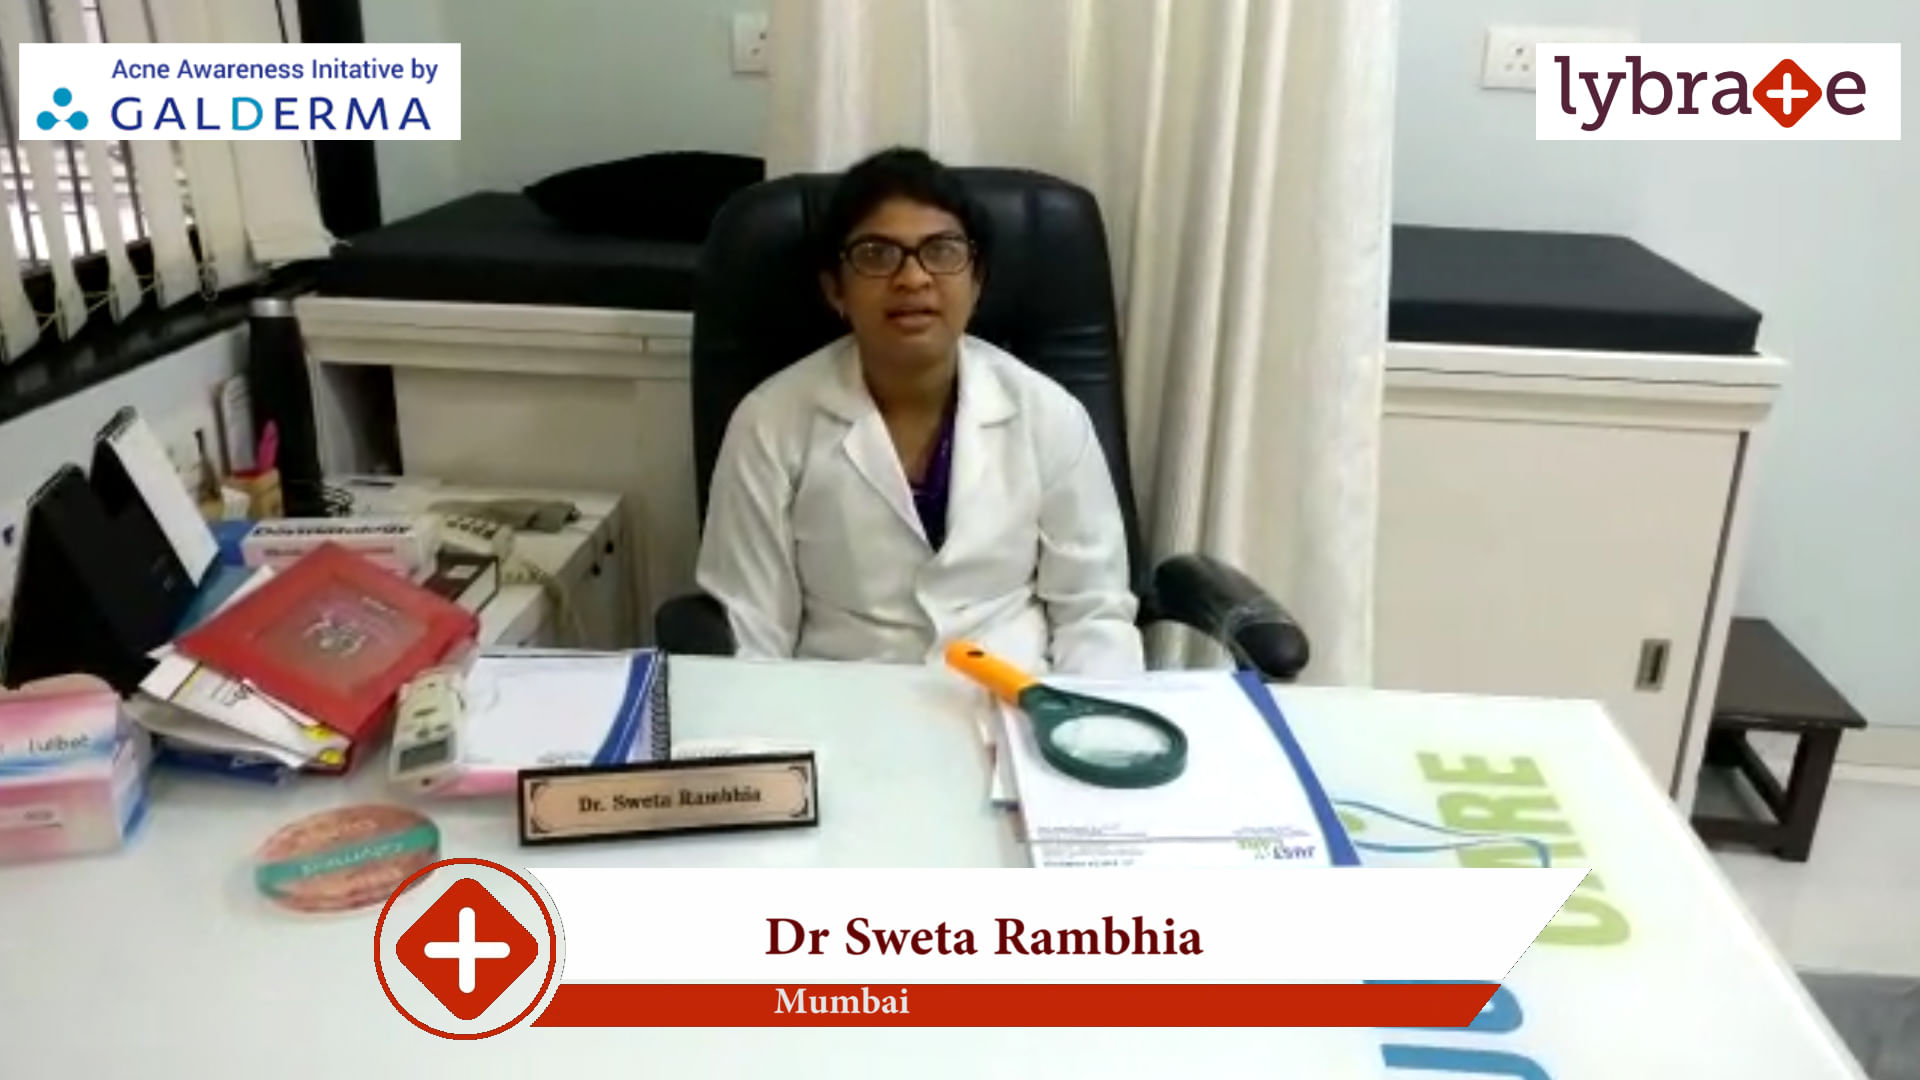 Lybrate | Dr. Sweta Rambhia speaks on IMPORTANCE OF TREATING ACNE EARLY